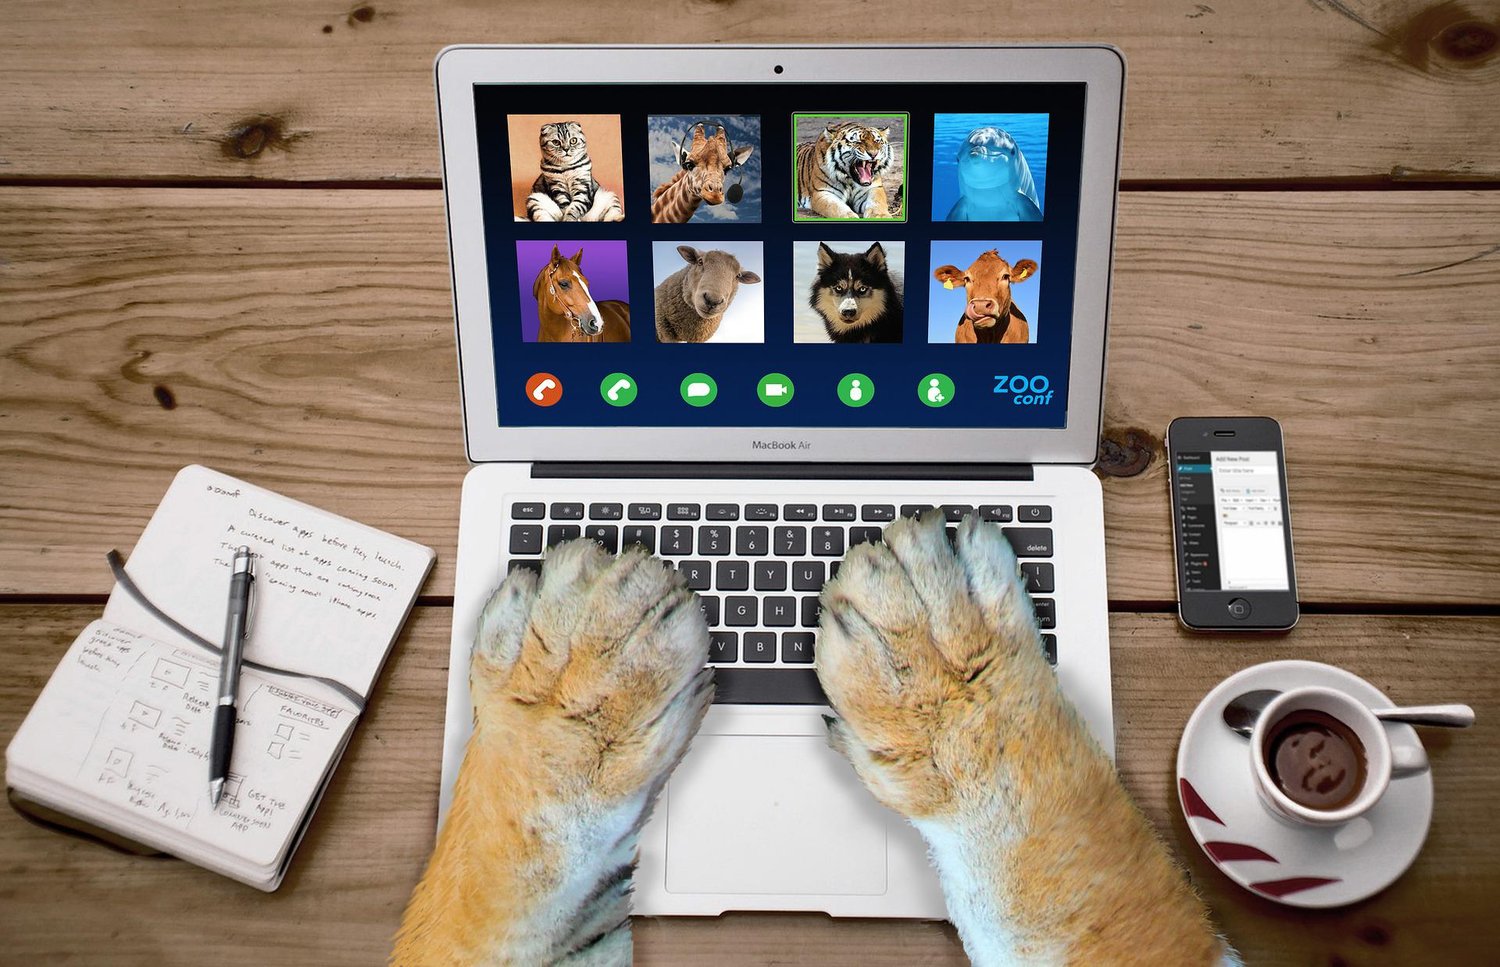 Tiger using a laptop